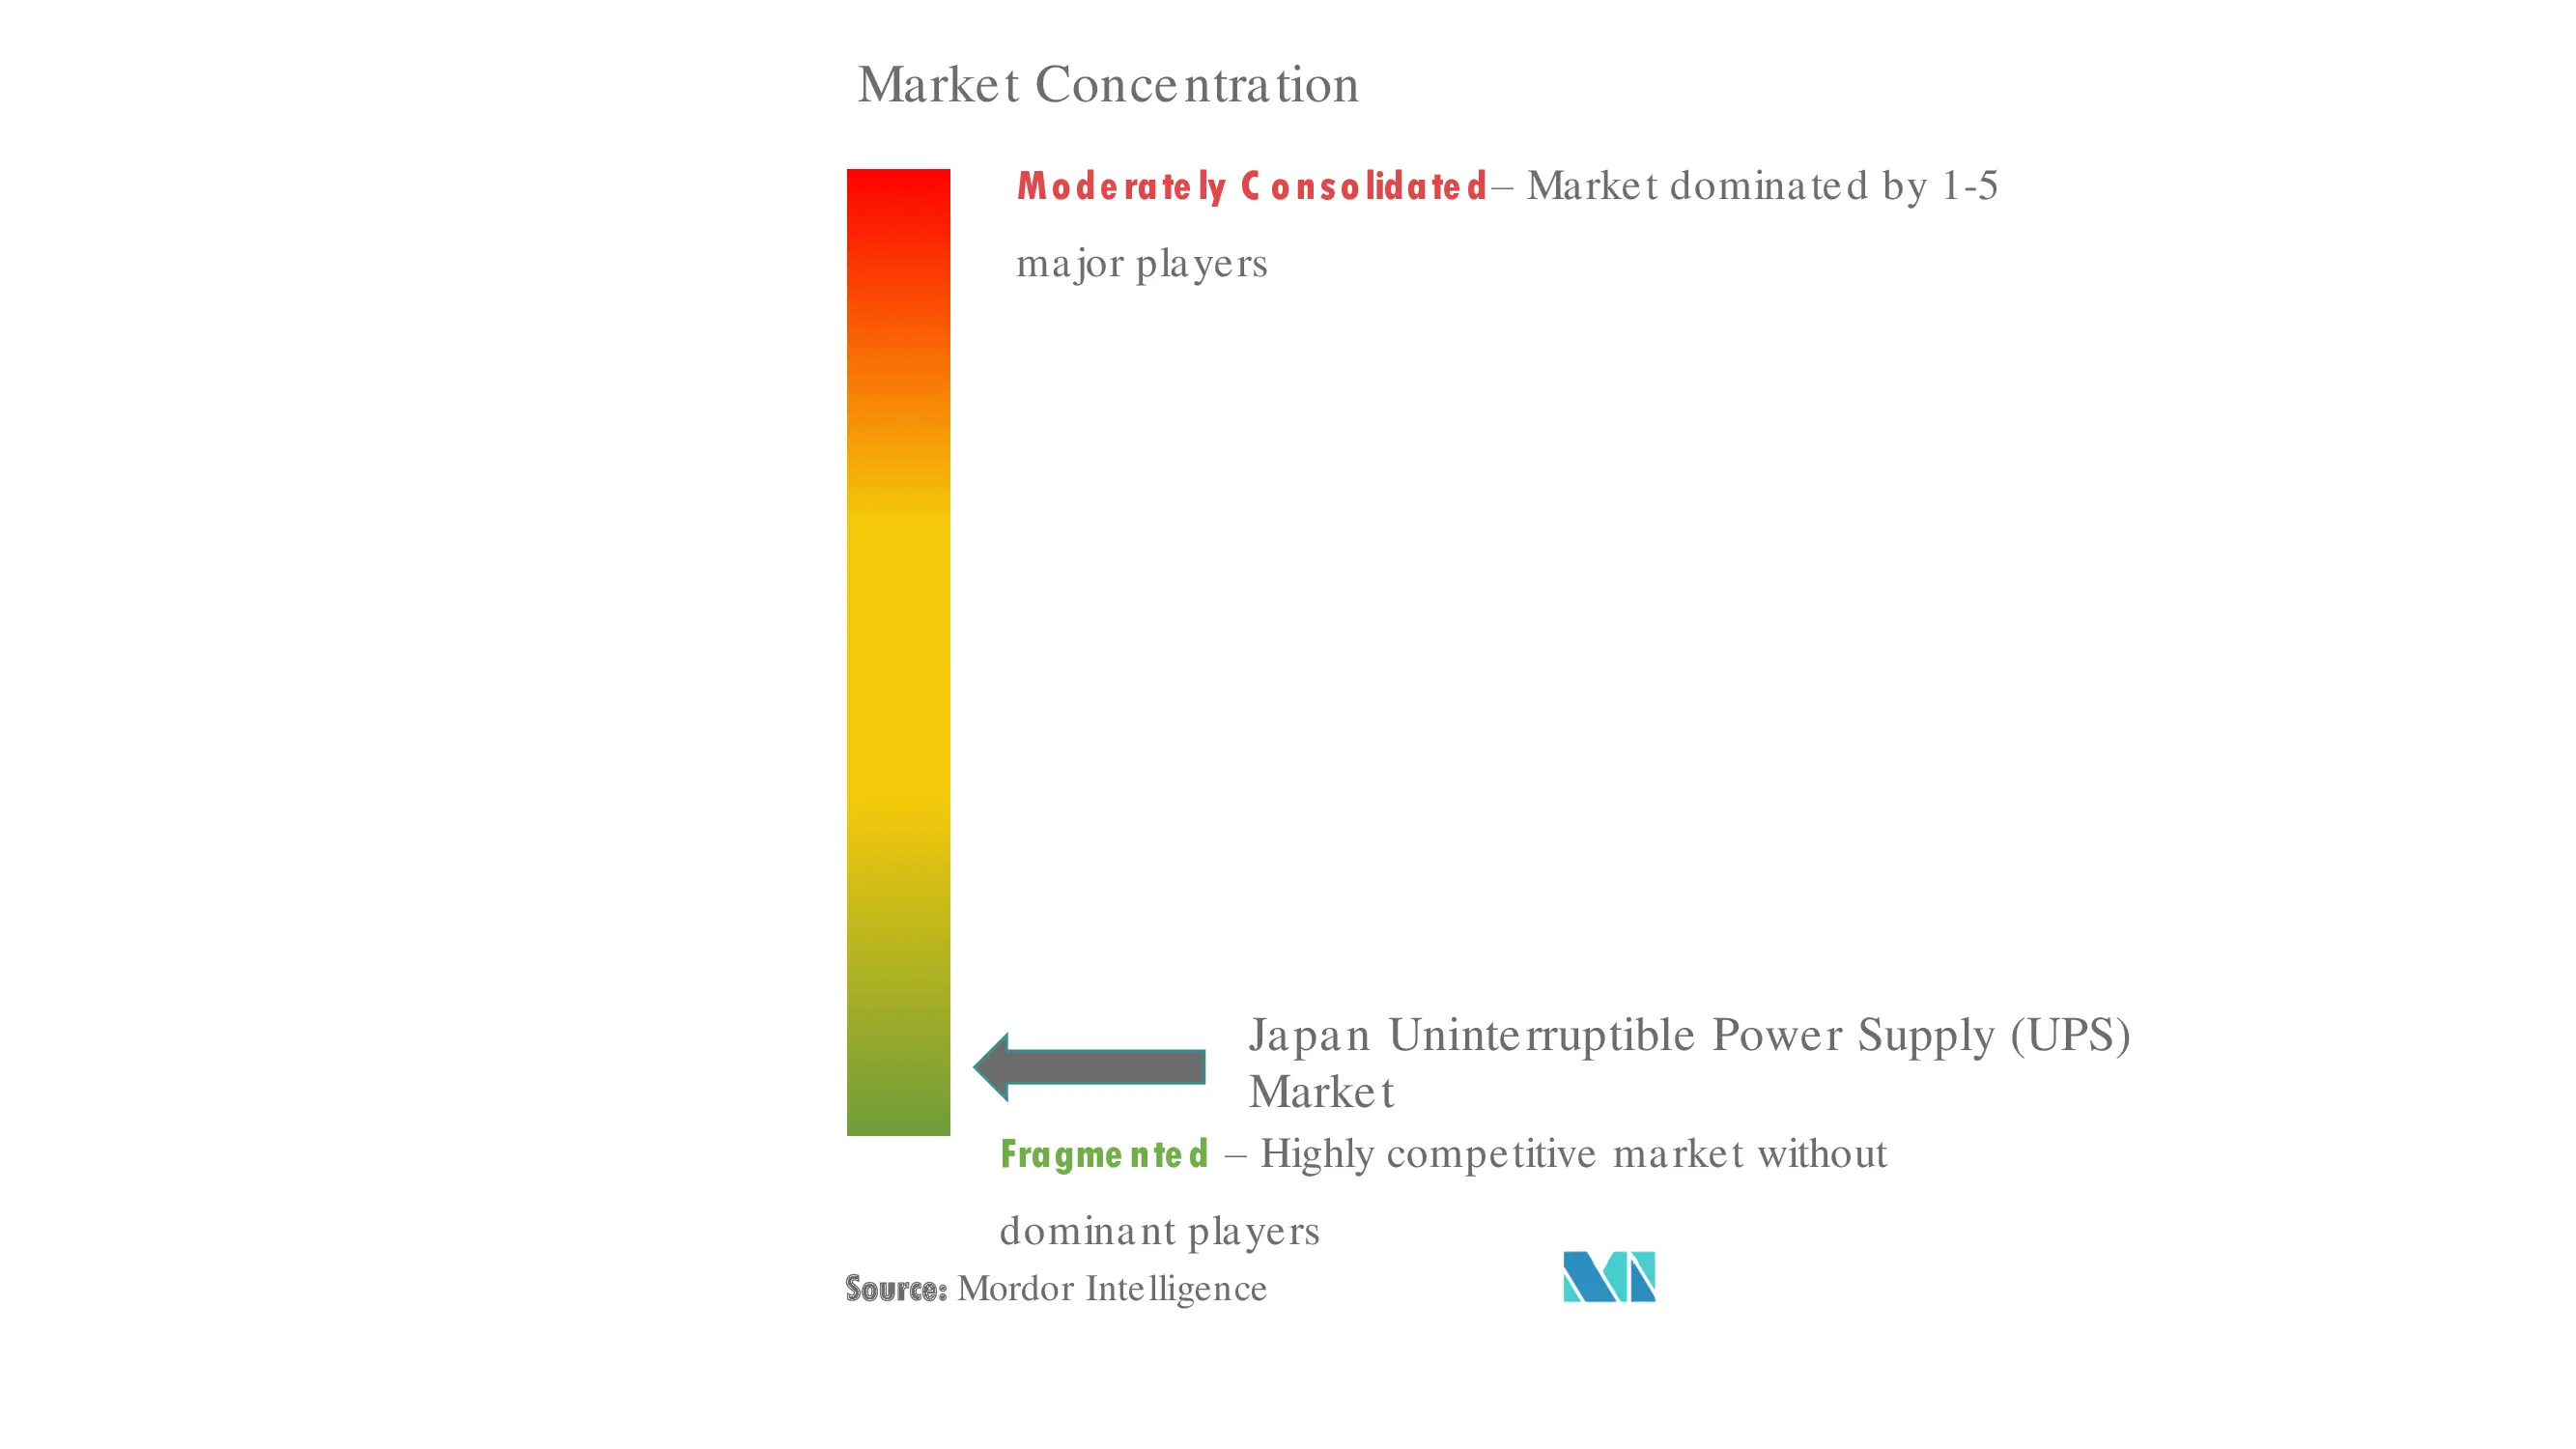 Japan Uninterrupted Power Supply (UPS) Market Concentration